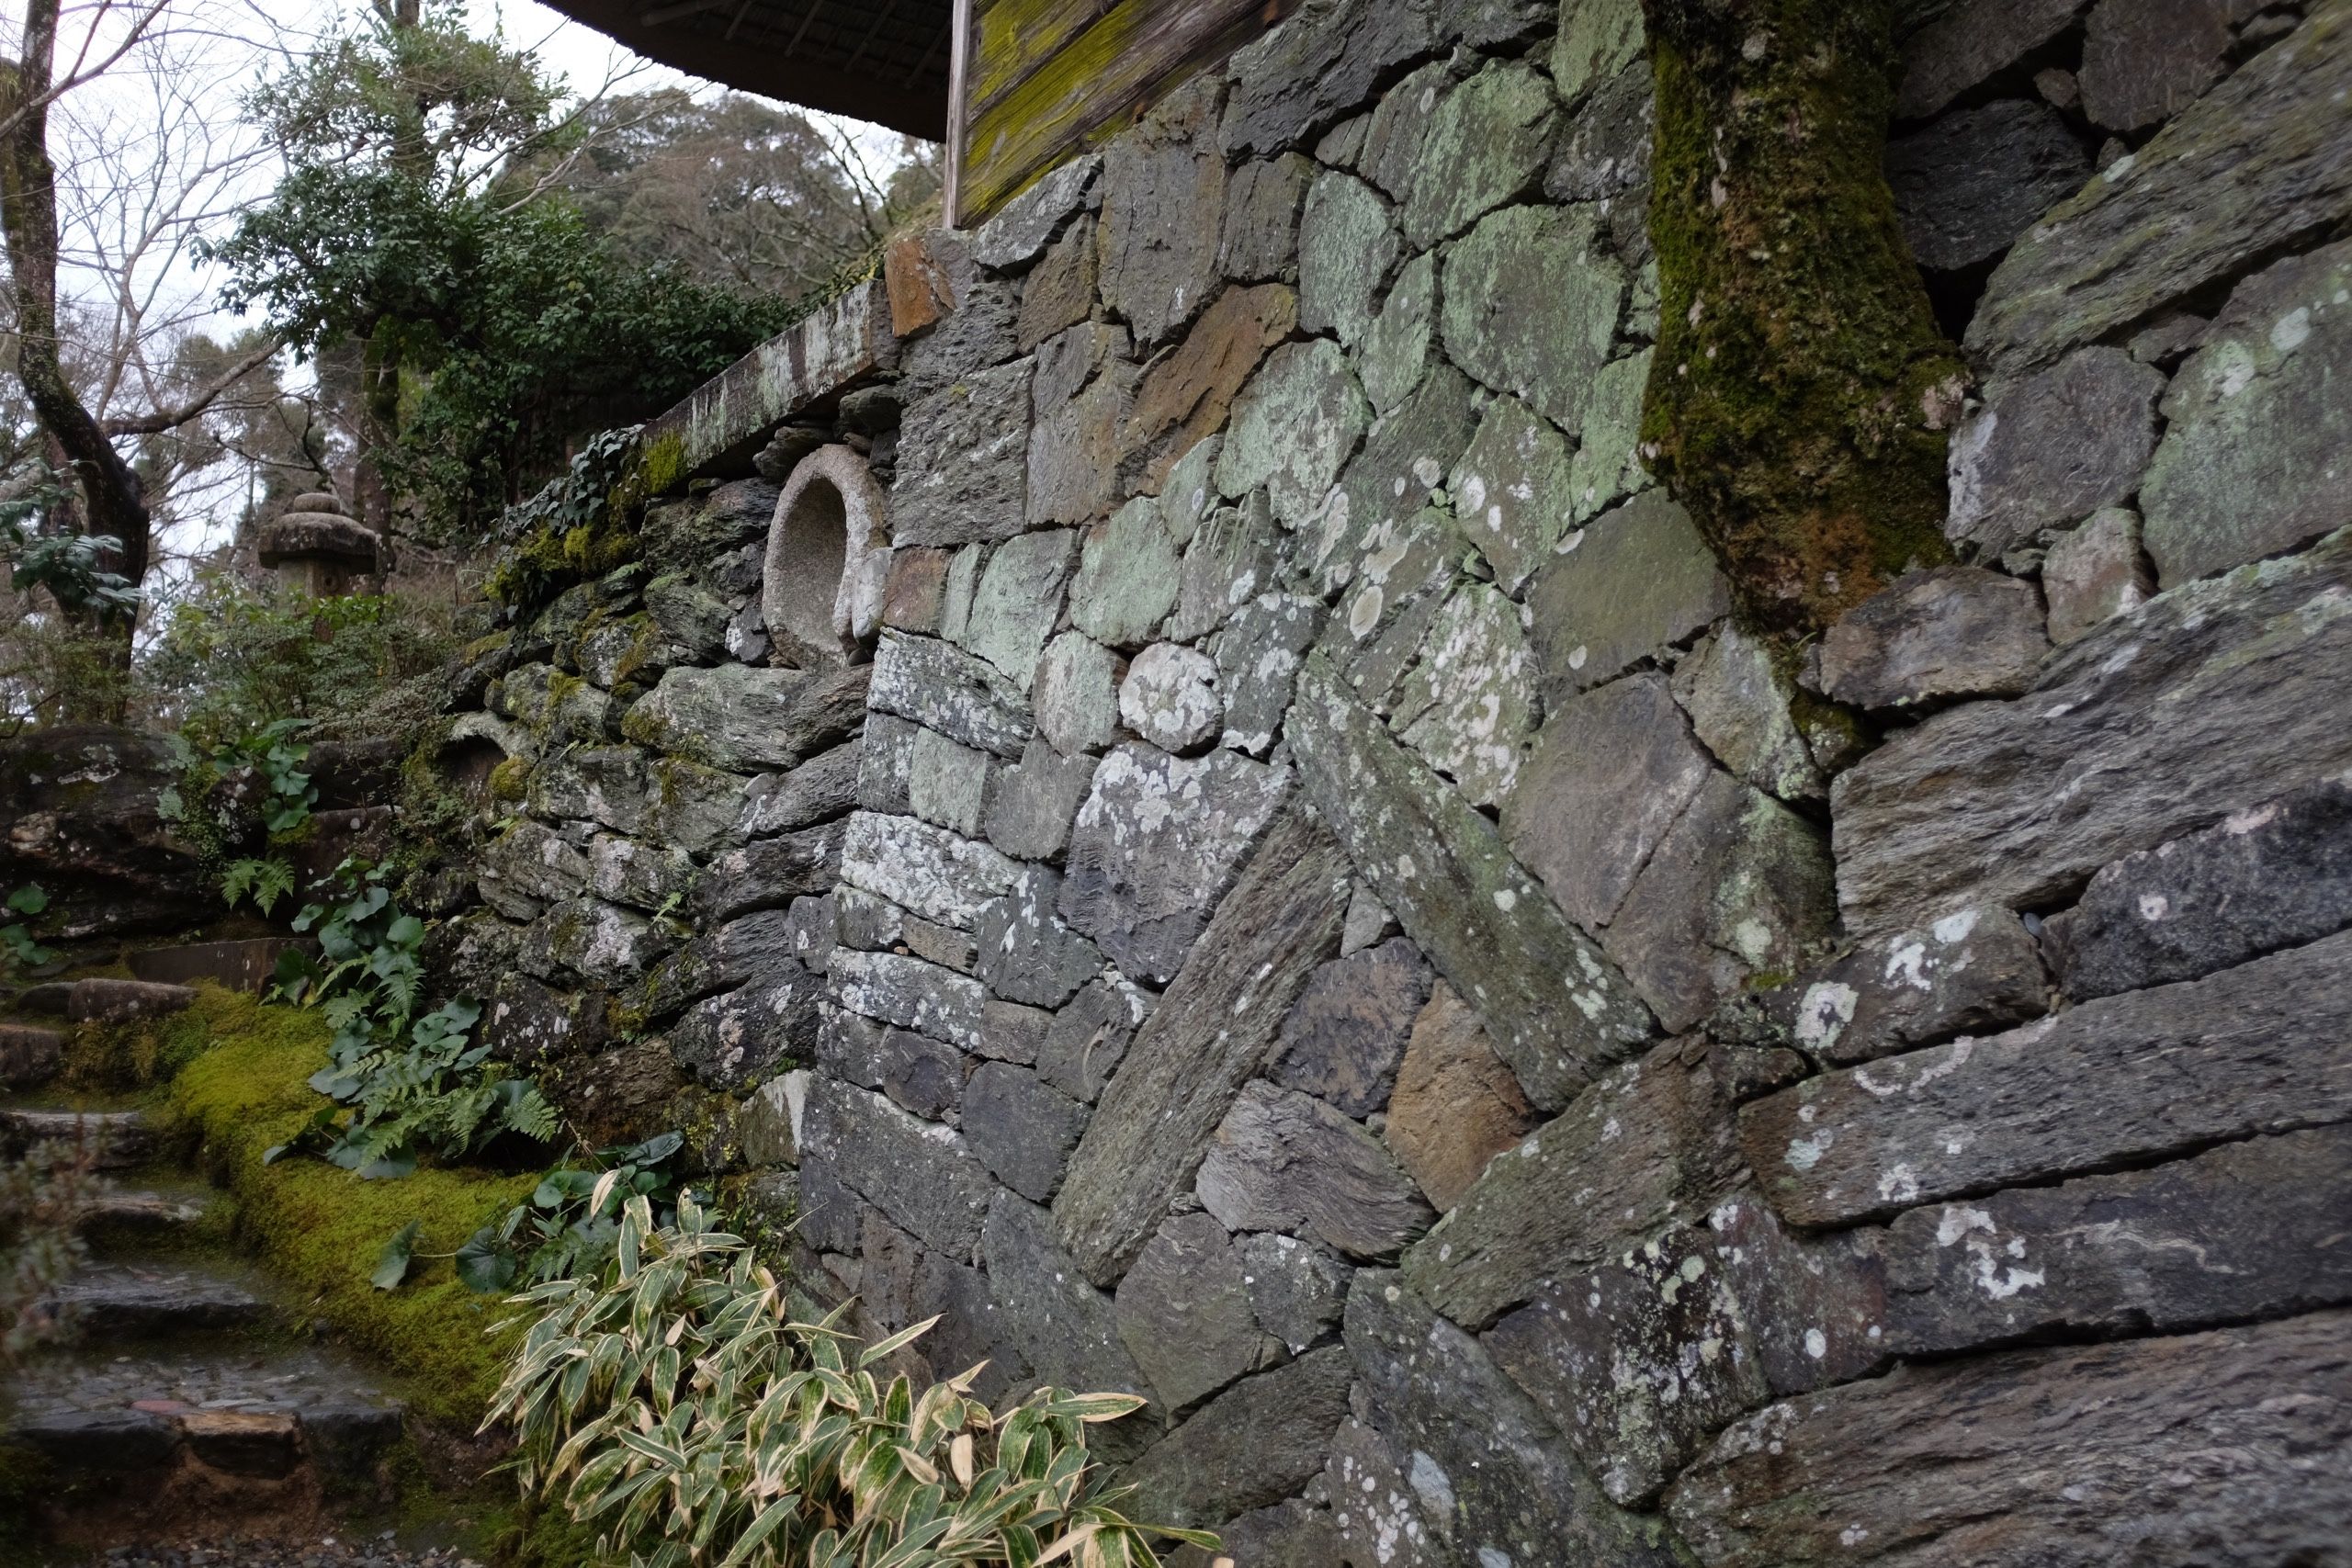 An intricate stone wall at the entrance of the Garyū Mountain Villa.